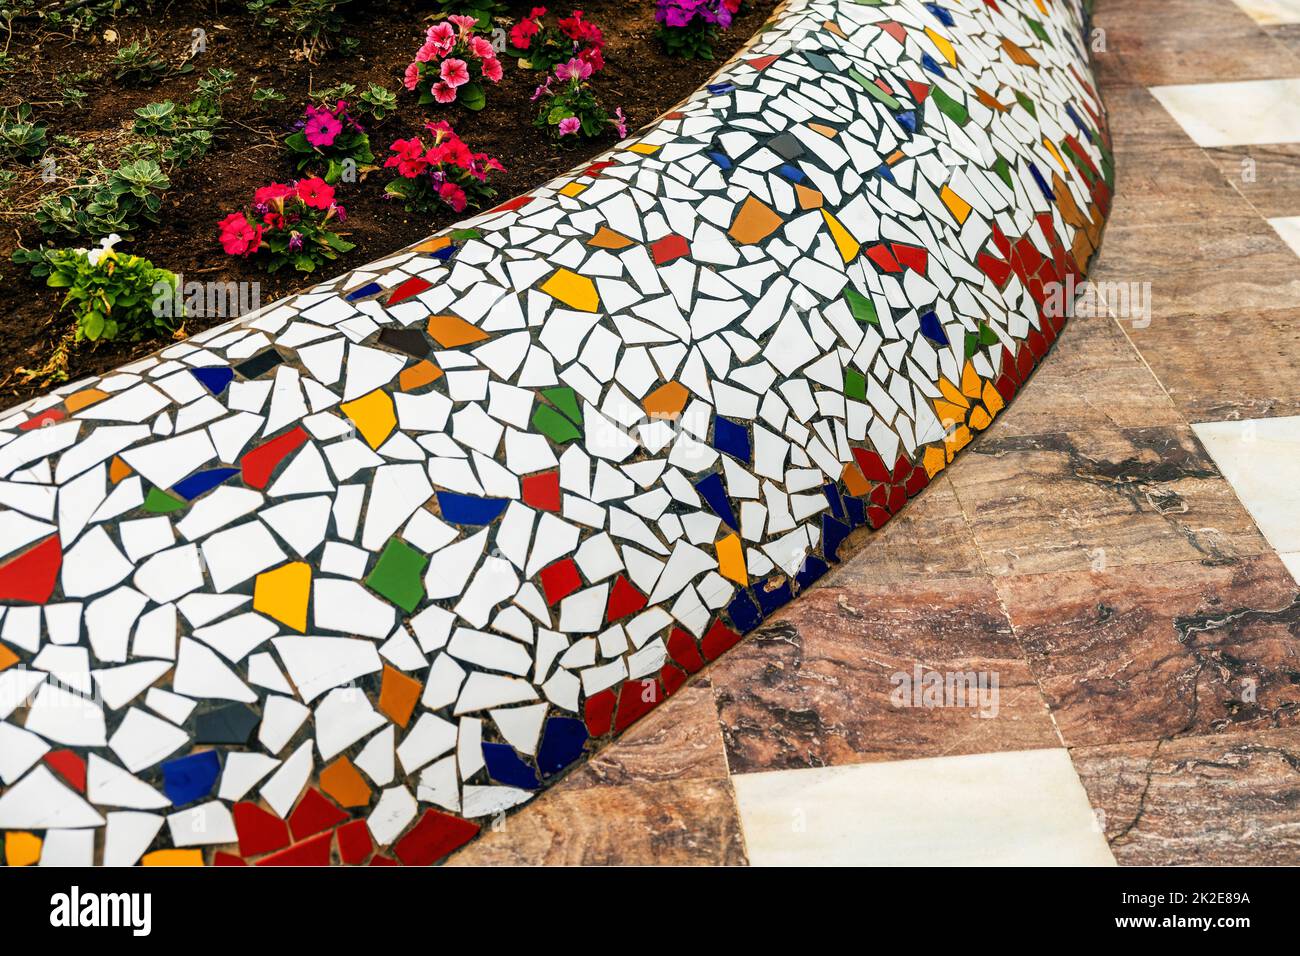 trencadis - broken tile mosaics in the park. Spain Stock Photo